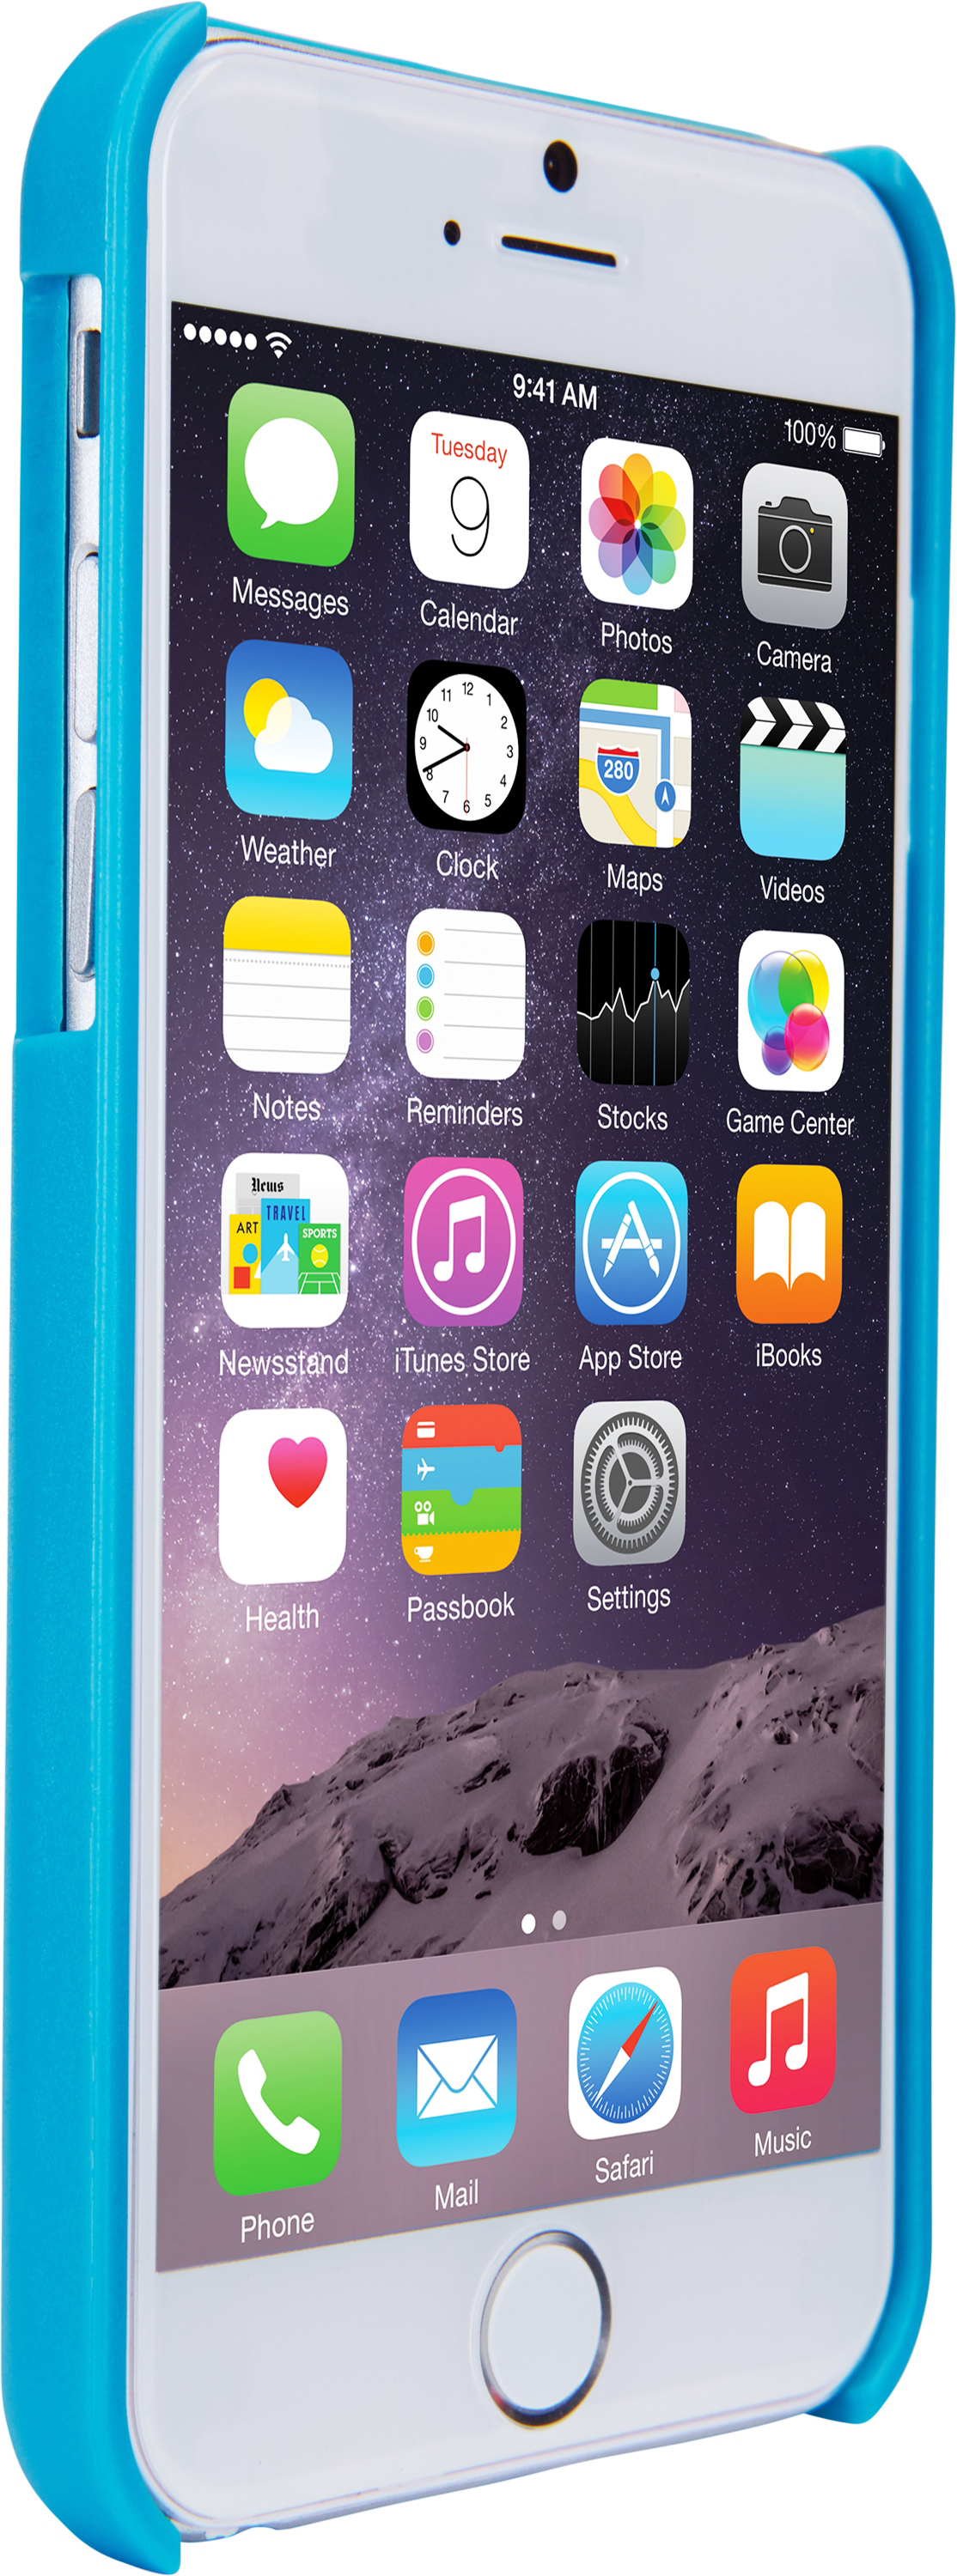 1.0, Blau 6s, 6, iPhone TGIE2124B THULE Backcover, Gauntlet Apple, iPhone